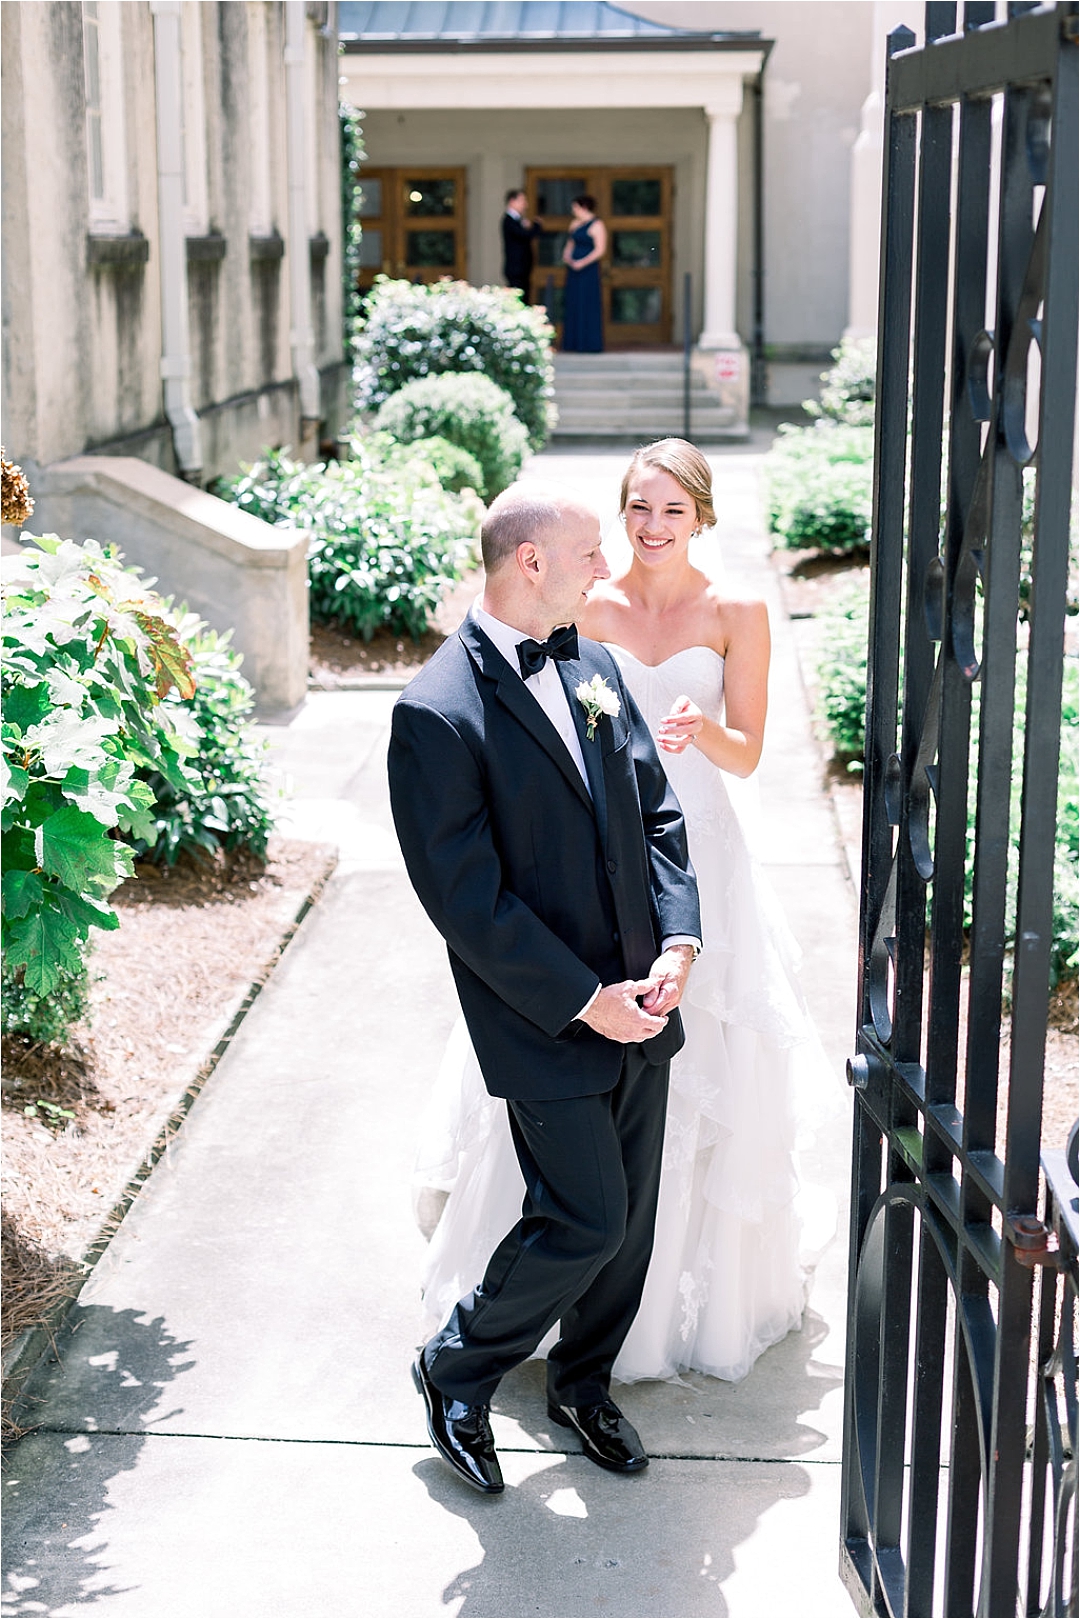 Photos by Leigh Wolfe, Atlanta's Top Wedding Photographer